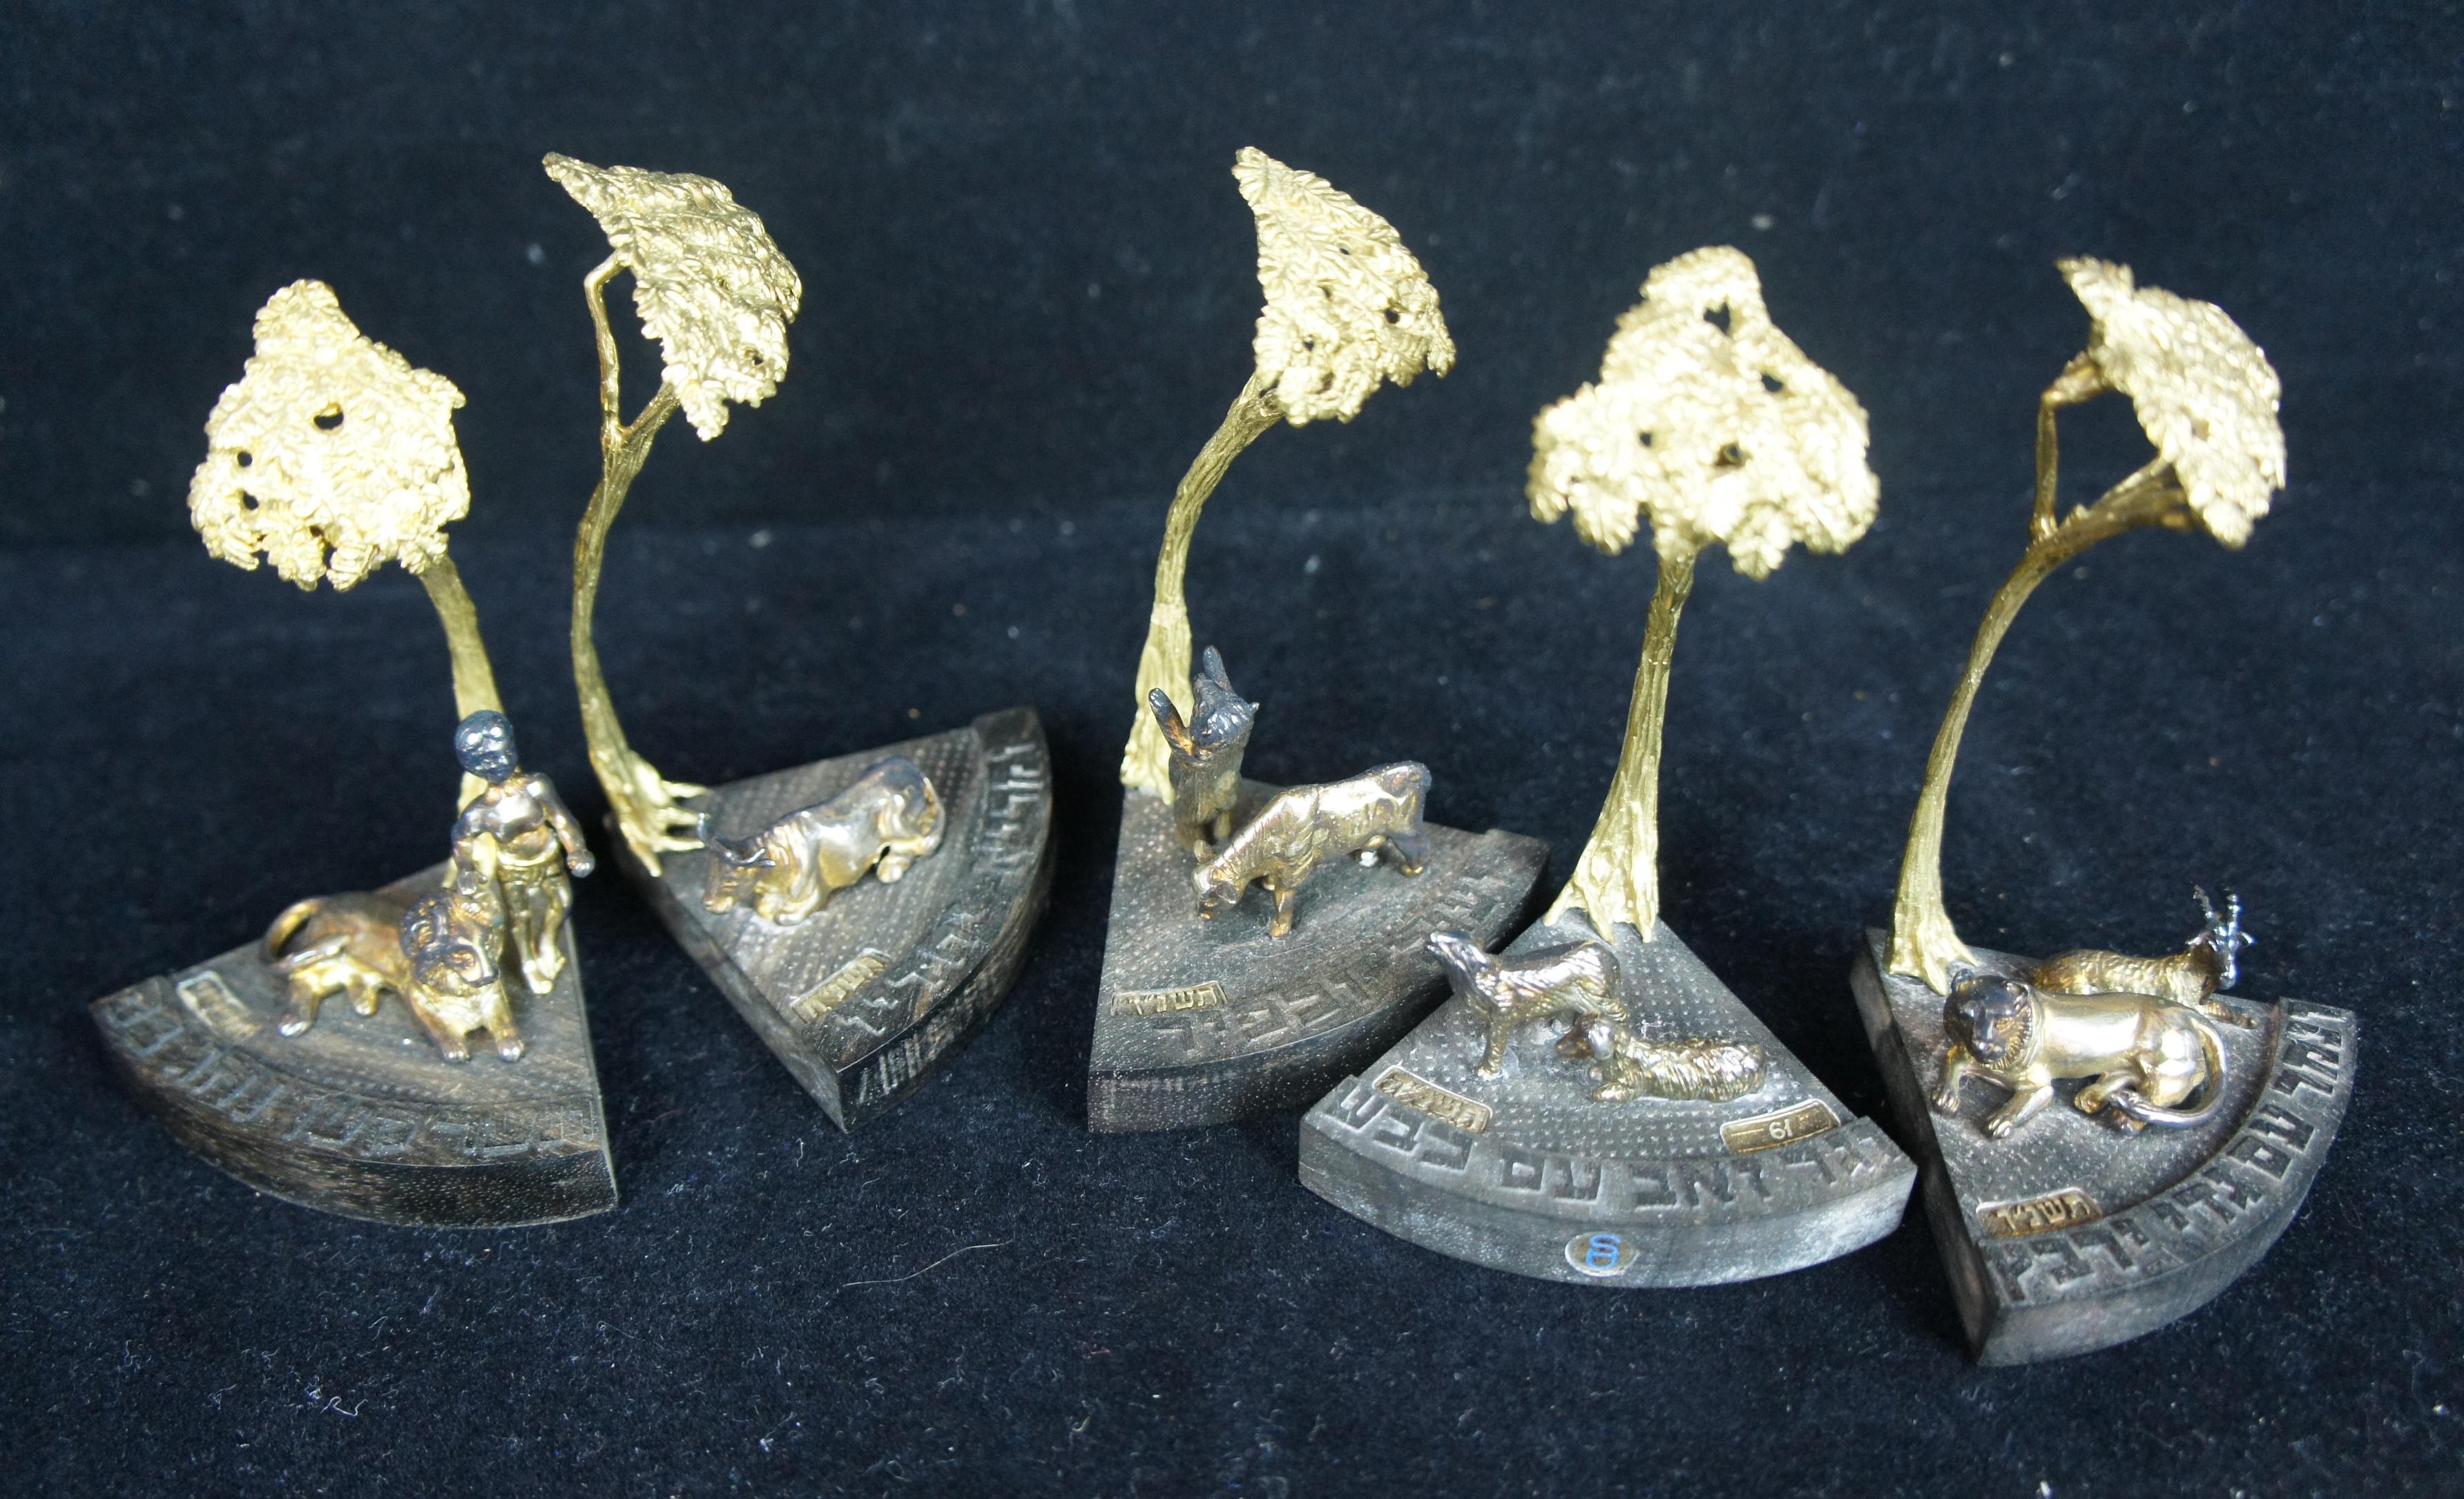 Dudik Swed Masters Silver & Brass Tree of Life Sculptural Judaica Figurine 5